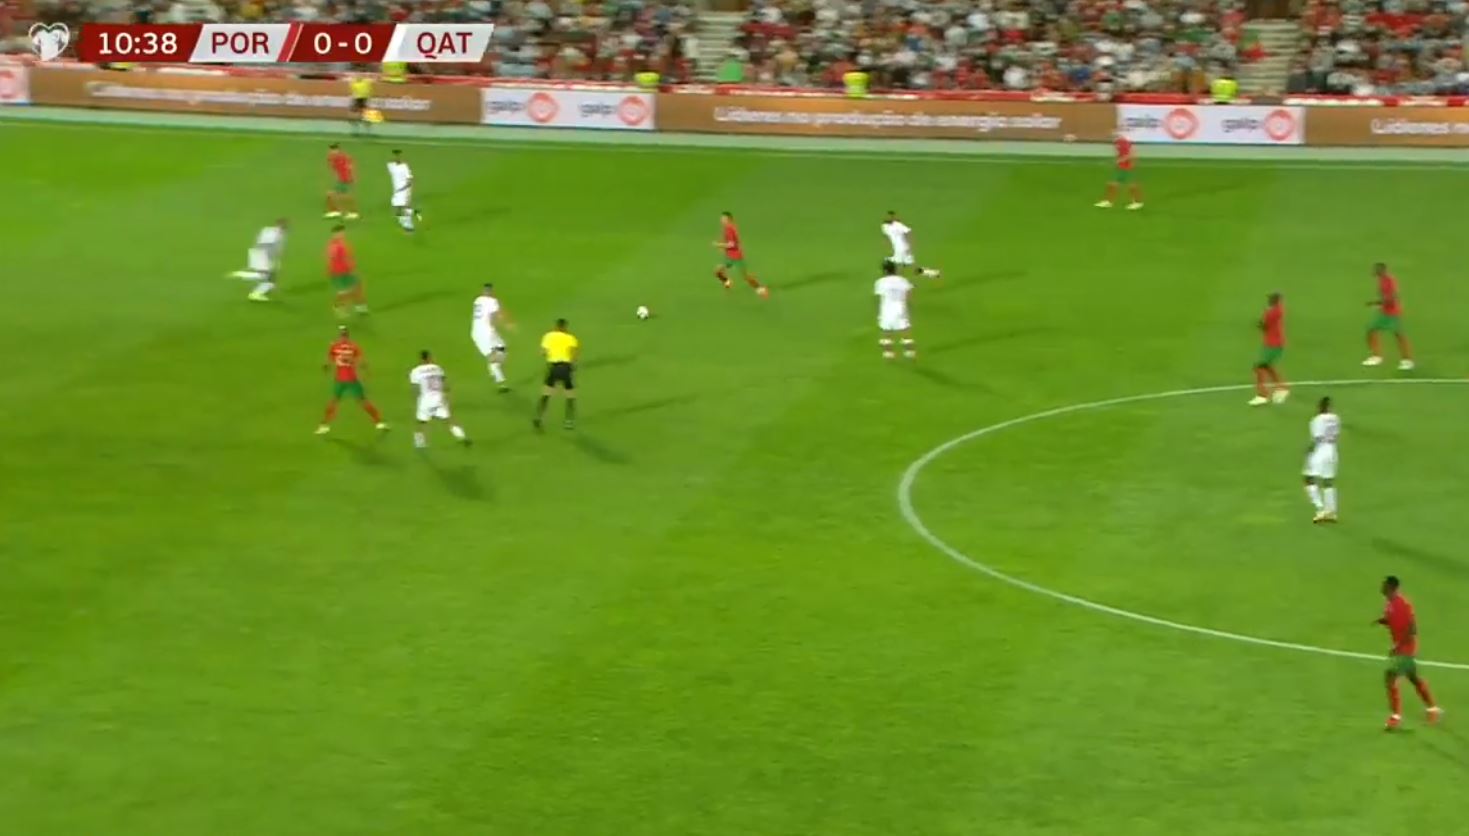 Portugal 3-0 Qatar (Friendly) - 2021.10.09 (20h15) Full Goals Highlight 